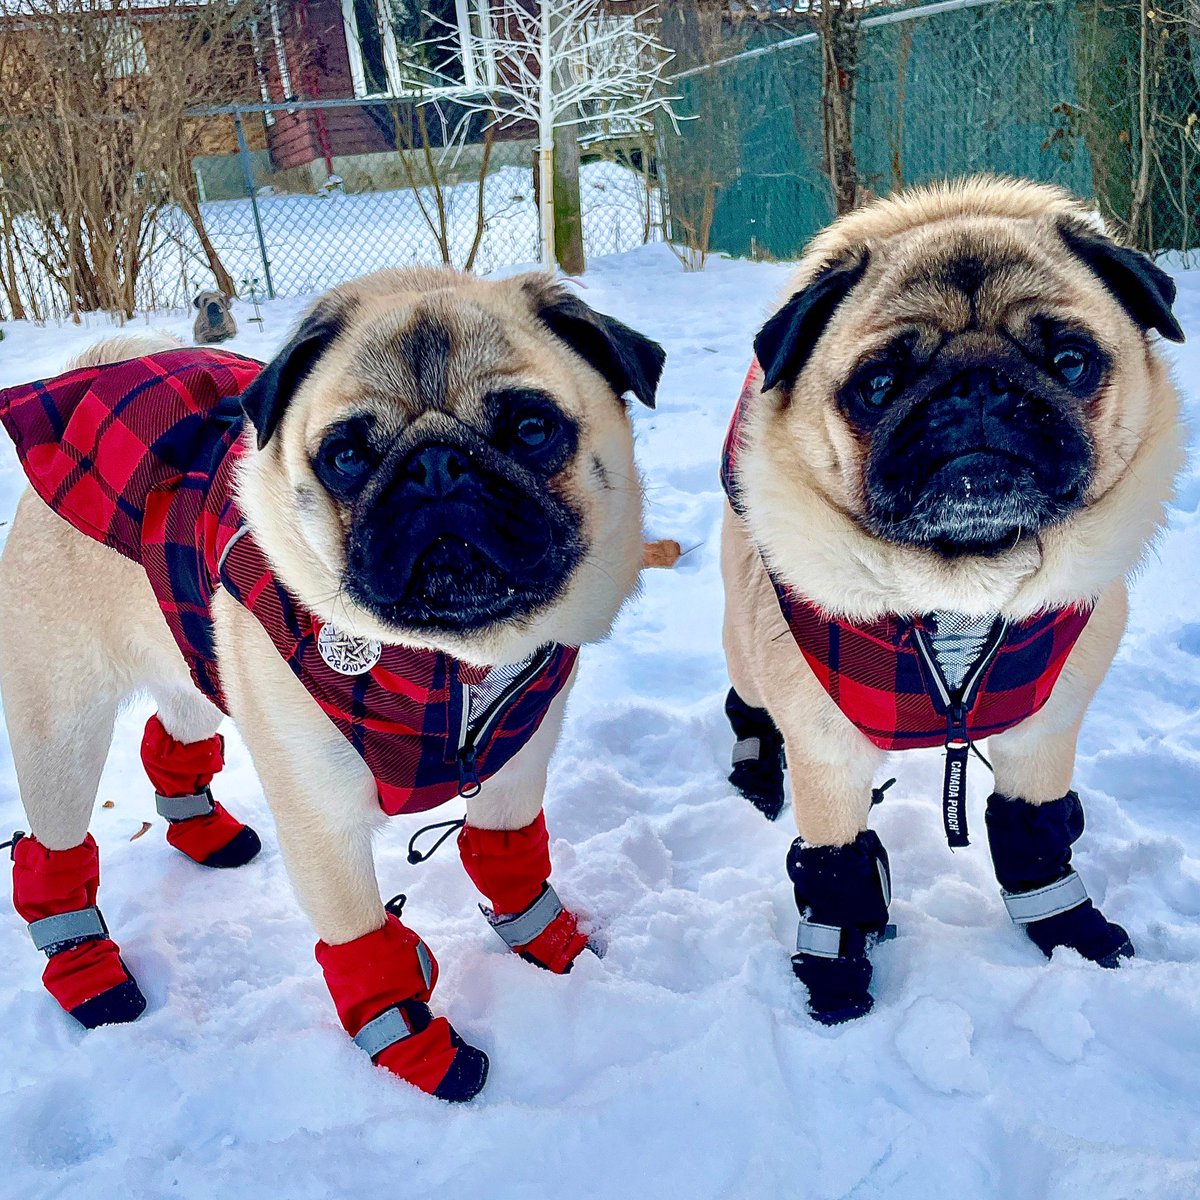 We bd “styling” ❣️😎

#pug #winter #dogfashion @CanadaPooch